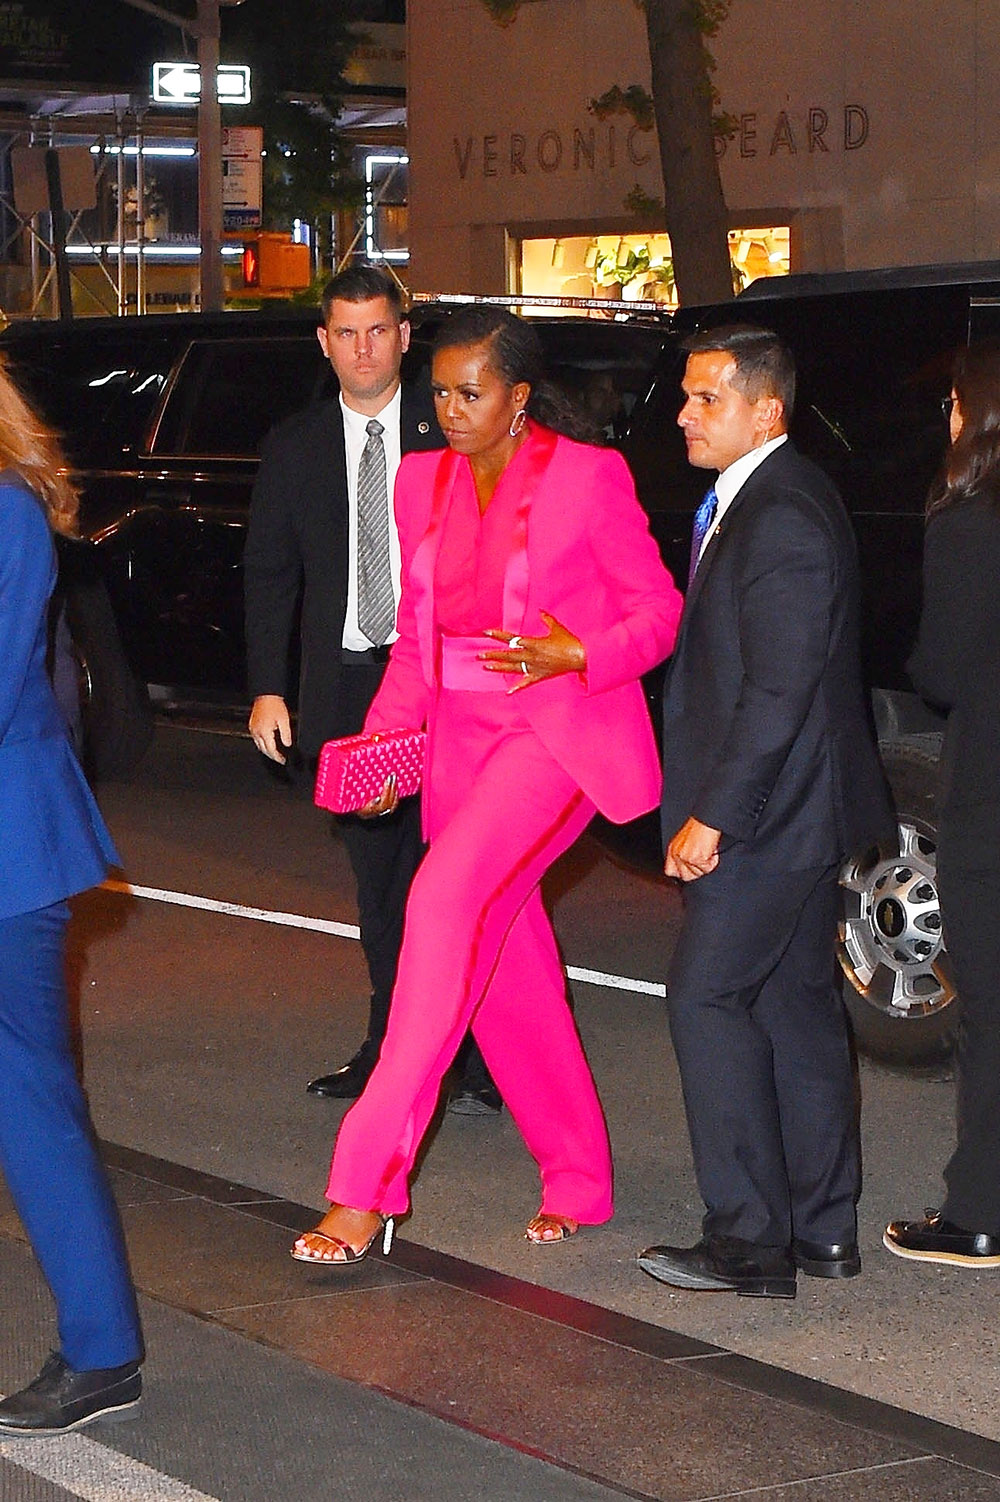 New York, NY - 米歇尔·奥巴马在纽约市马克酒店举行派对后抵达乔治·克鲁尼的阿尔比奖颁奖典礼时身穿粉色西装。如图所示: Michelle Obama BACKGRID USA 2022 年 9 月 29 日 署名必读： JosiahW / BACKGRID USA：+1 310 798 9111 / usasales@backgrid.com 英国：+44 208 344 2007 / uksales@backgrid.com *英国客户 - 请包含儿童的图片在发布前像素化面部*